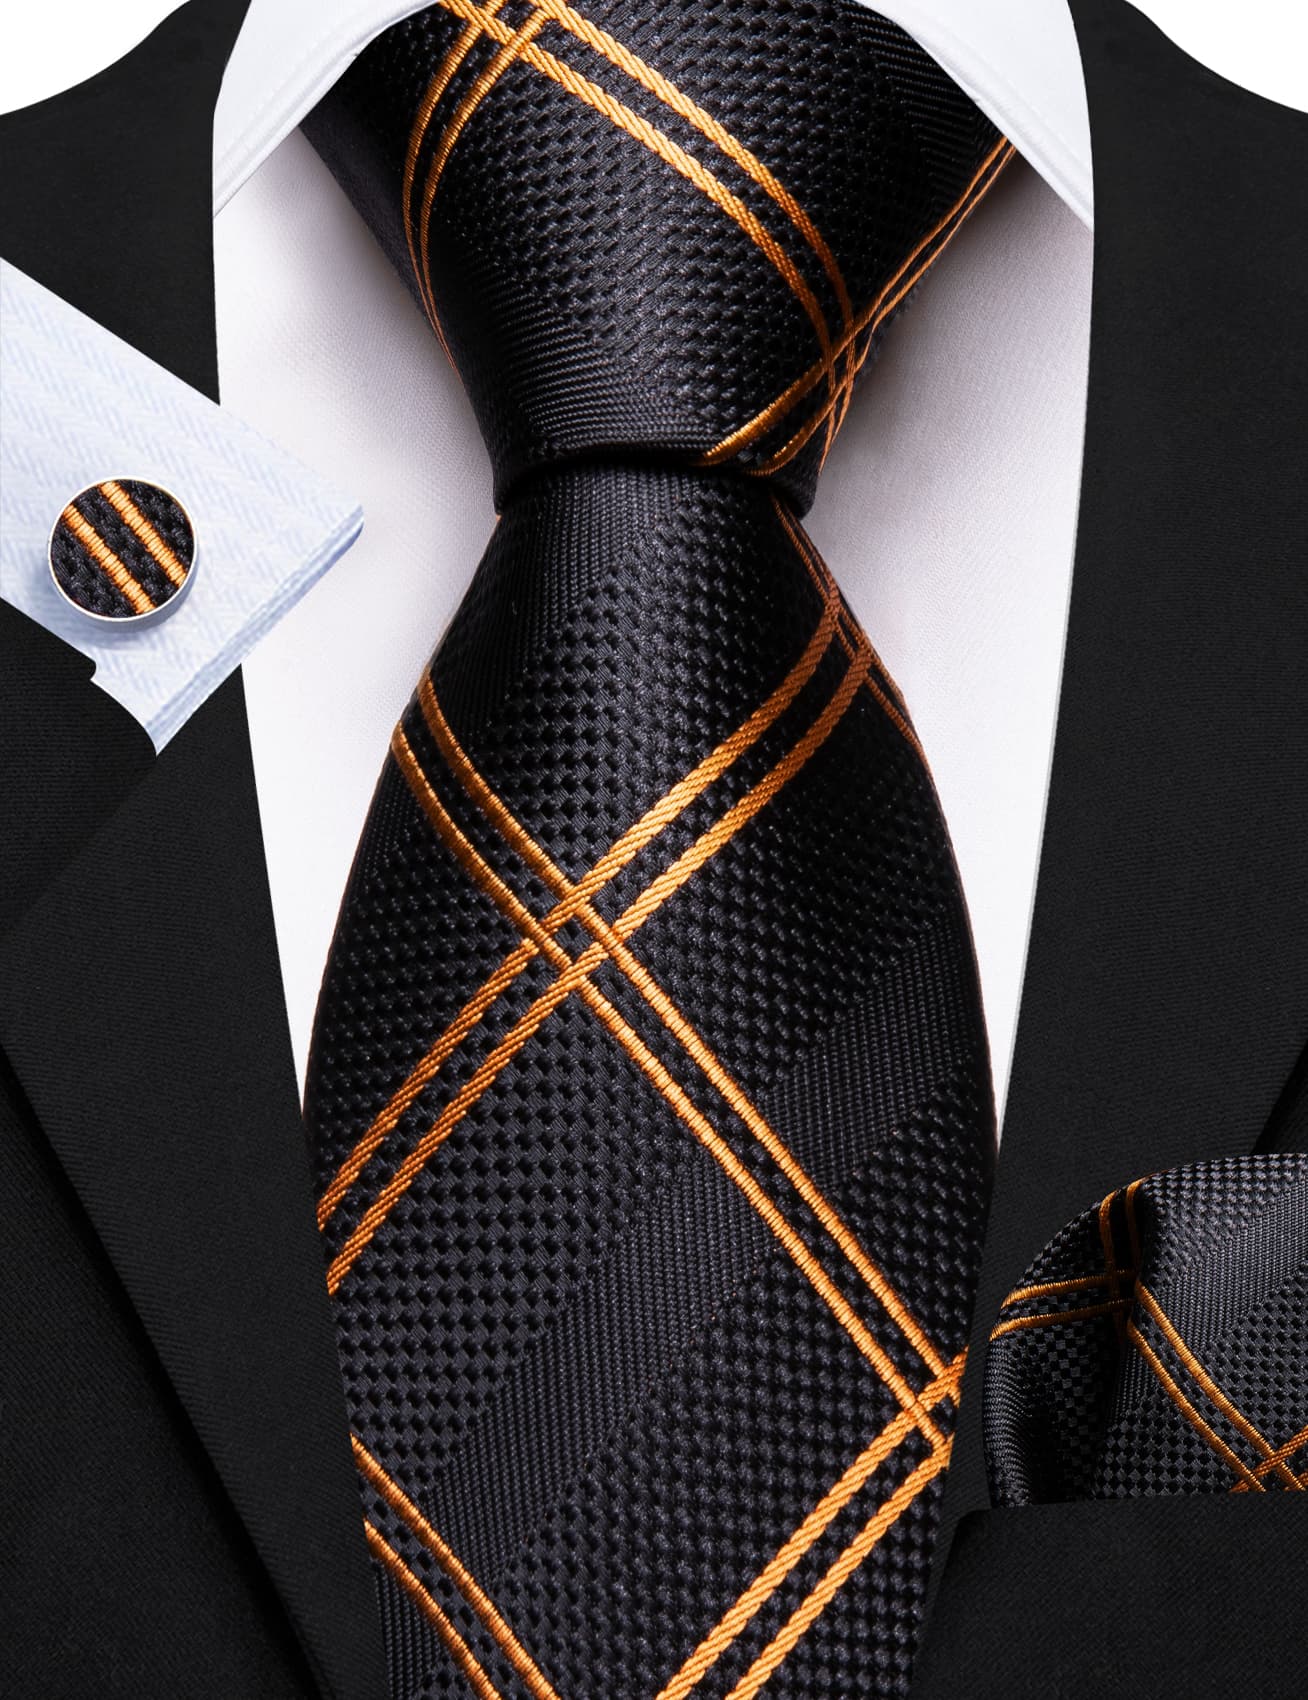 black necktie gold stripes necktie for men ;s office outfit 